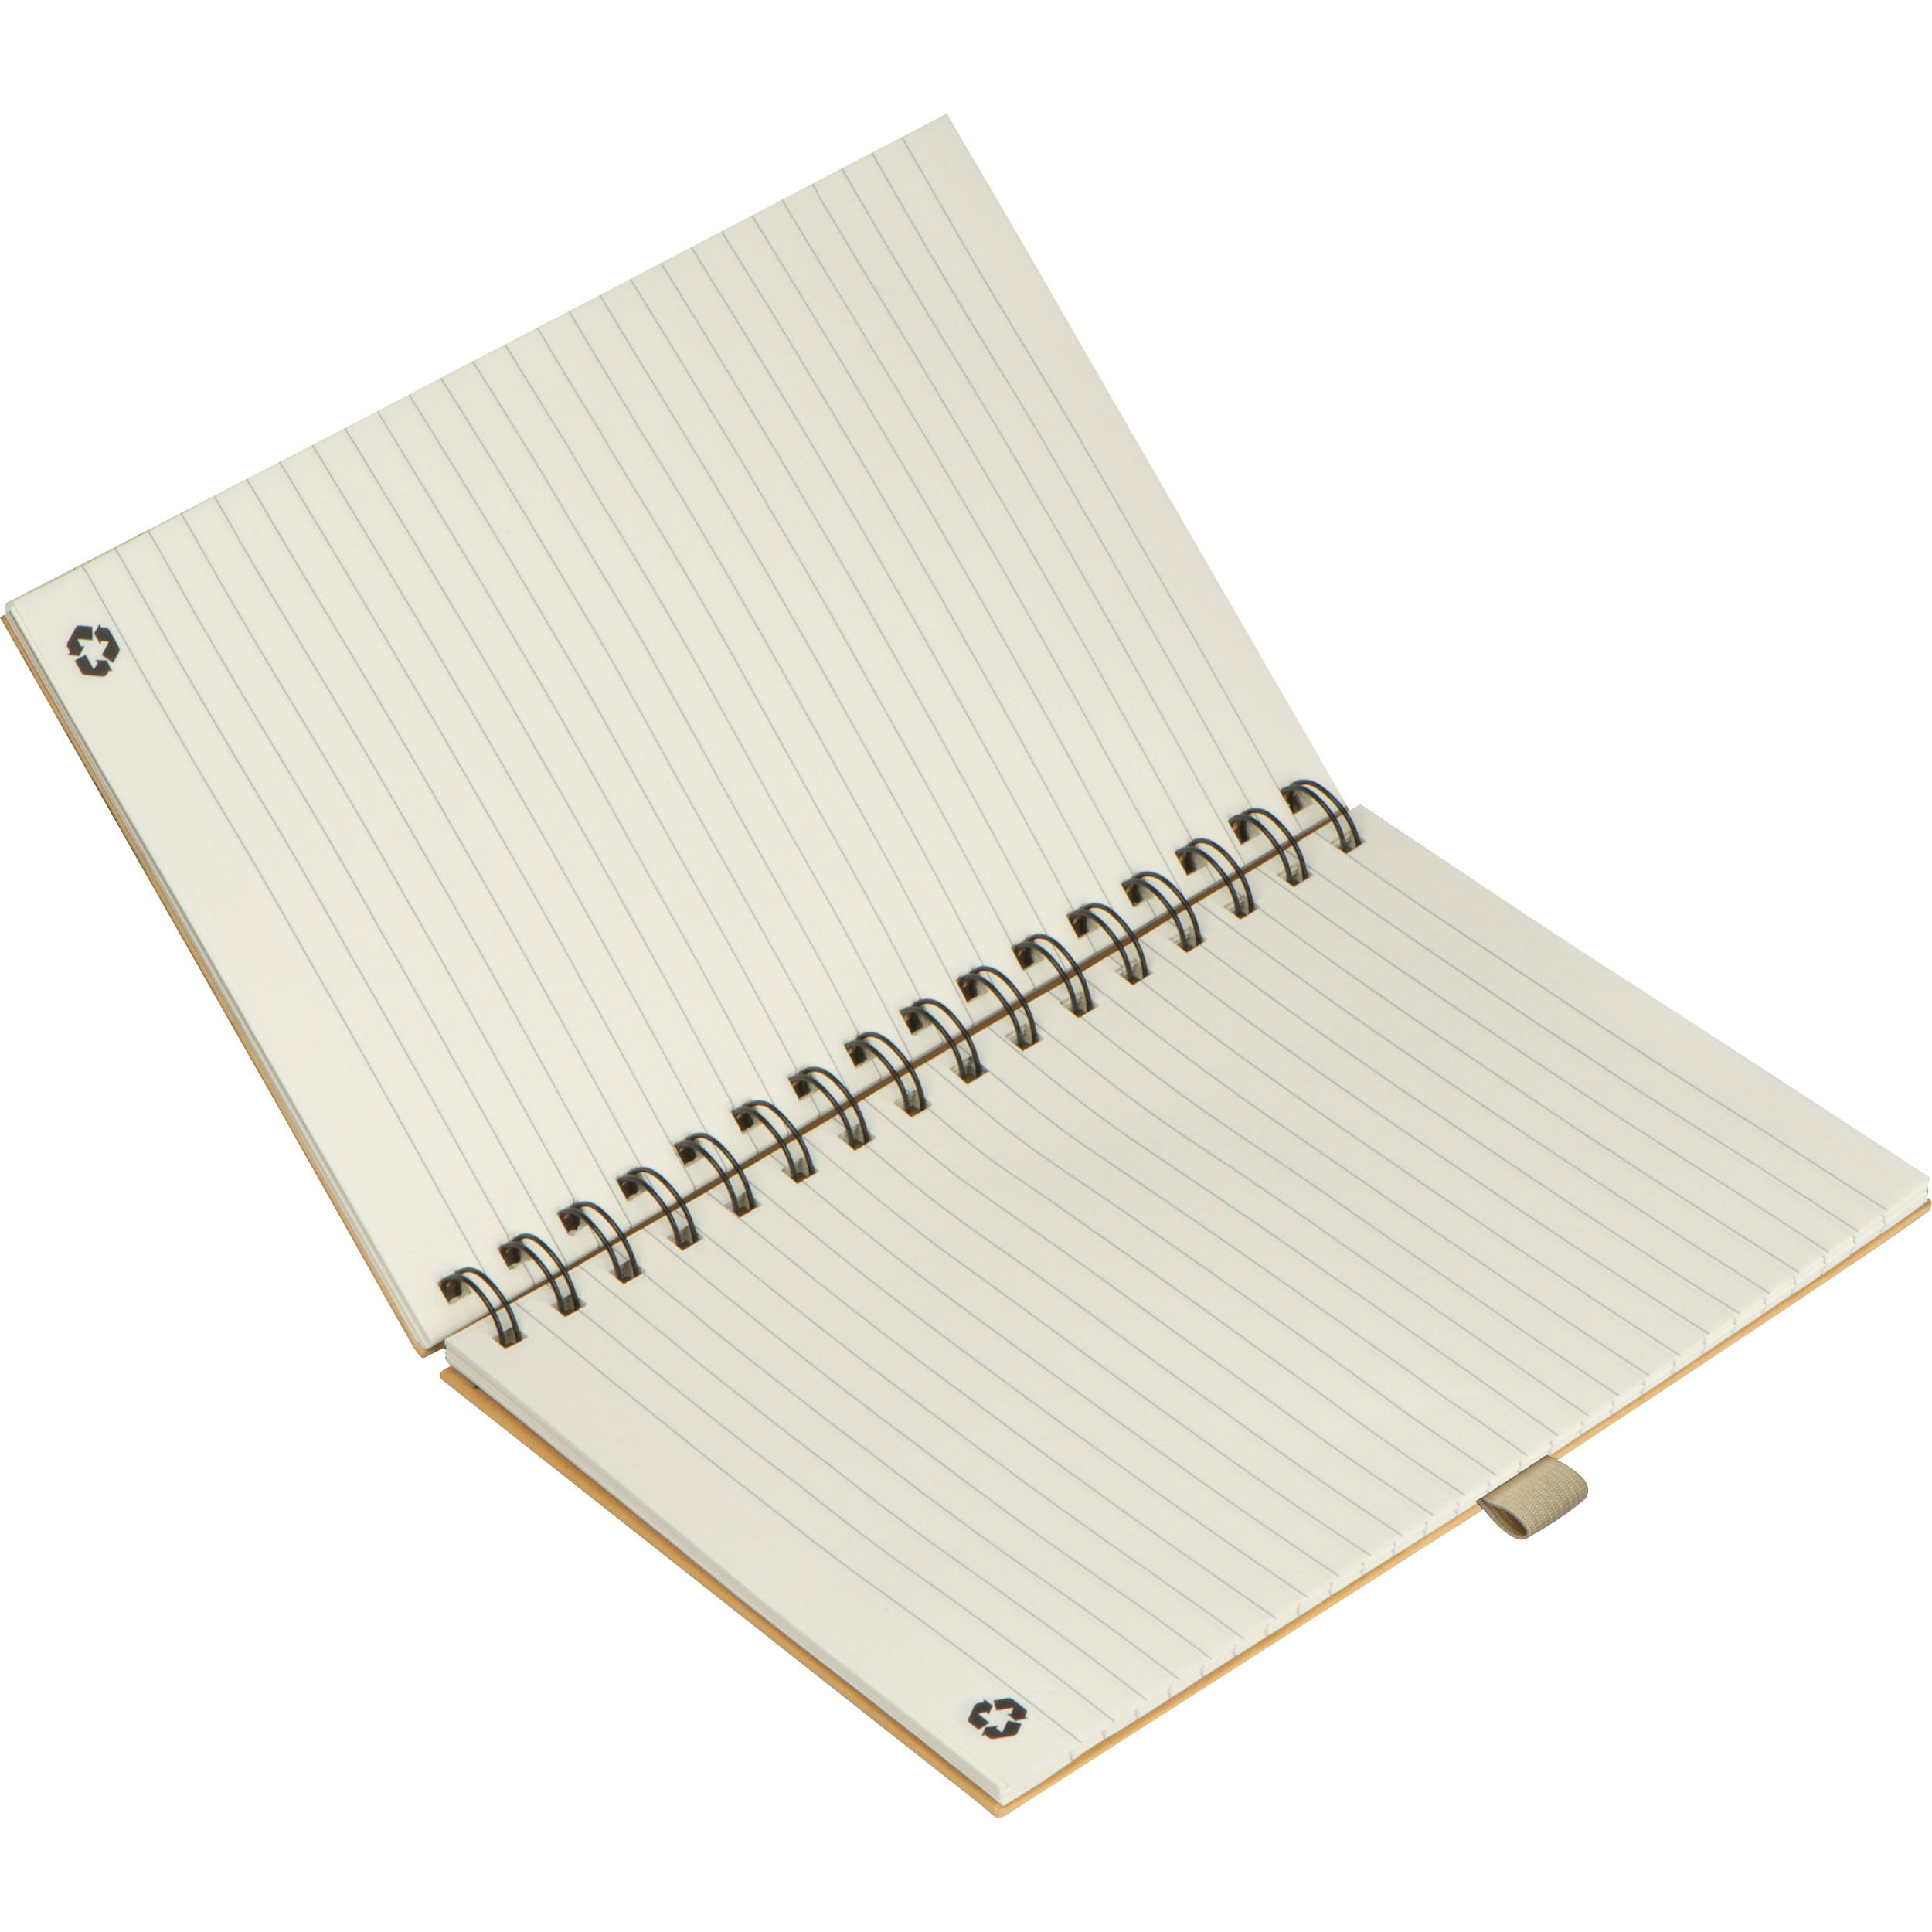 Cardboard notebook